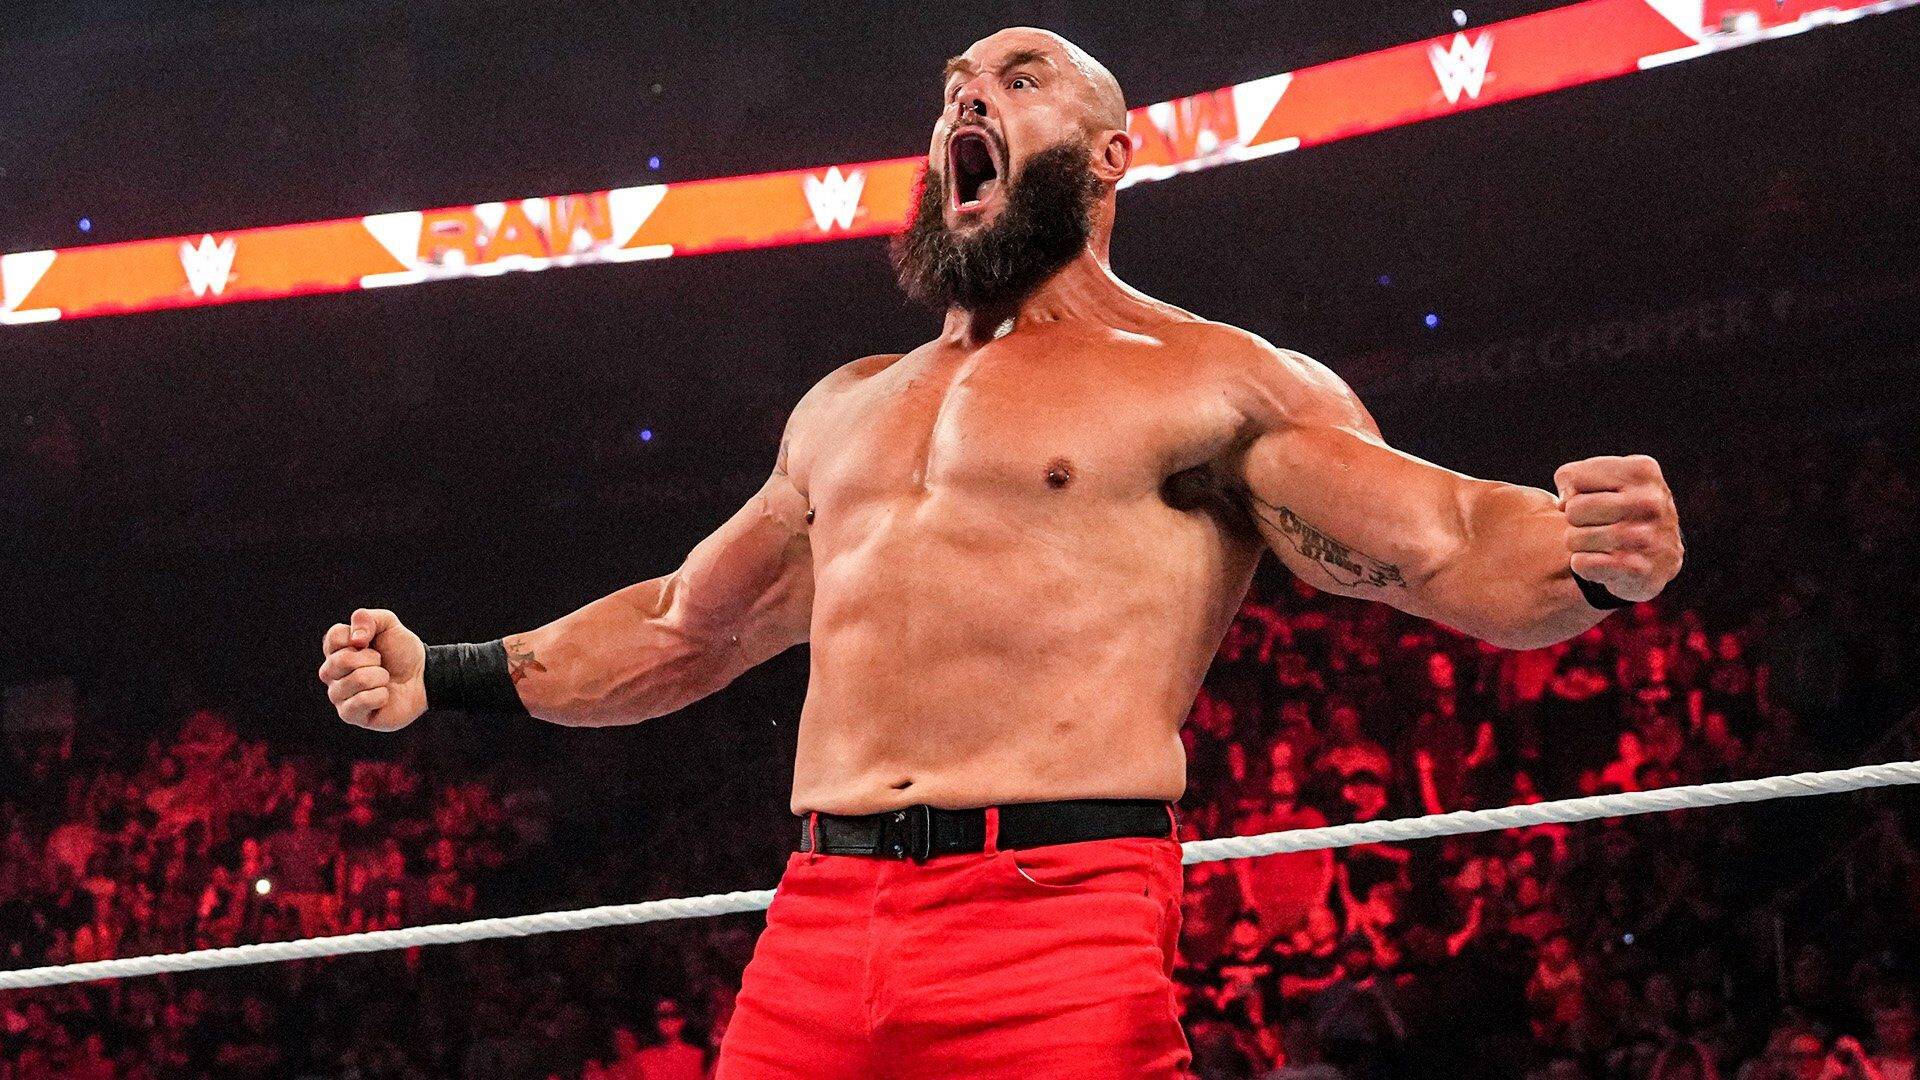 Braun Strowman is back in WWE